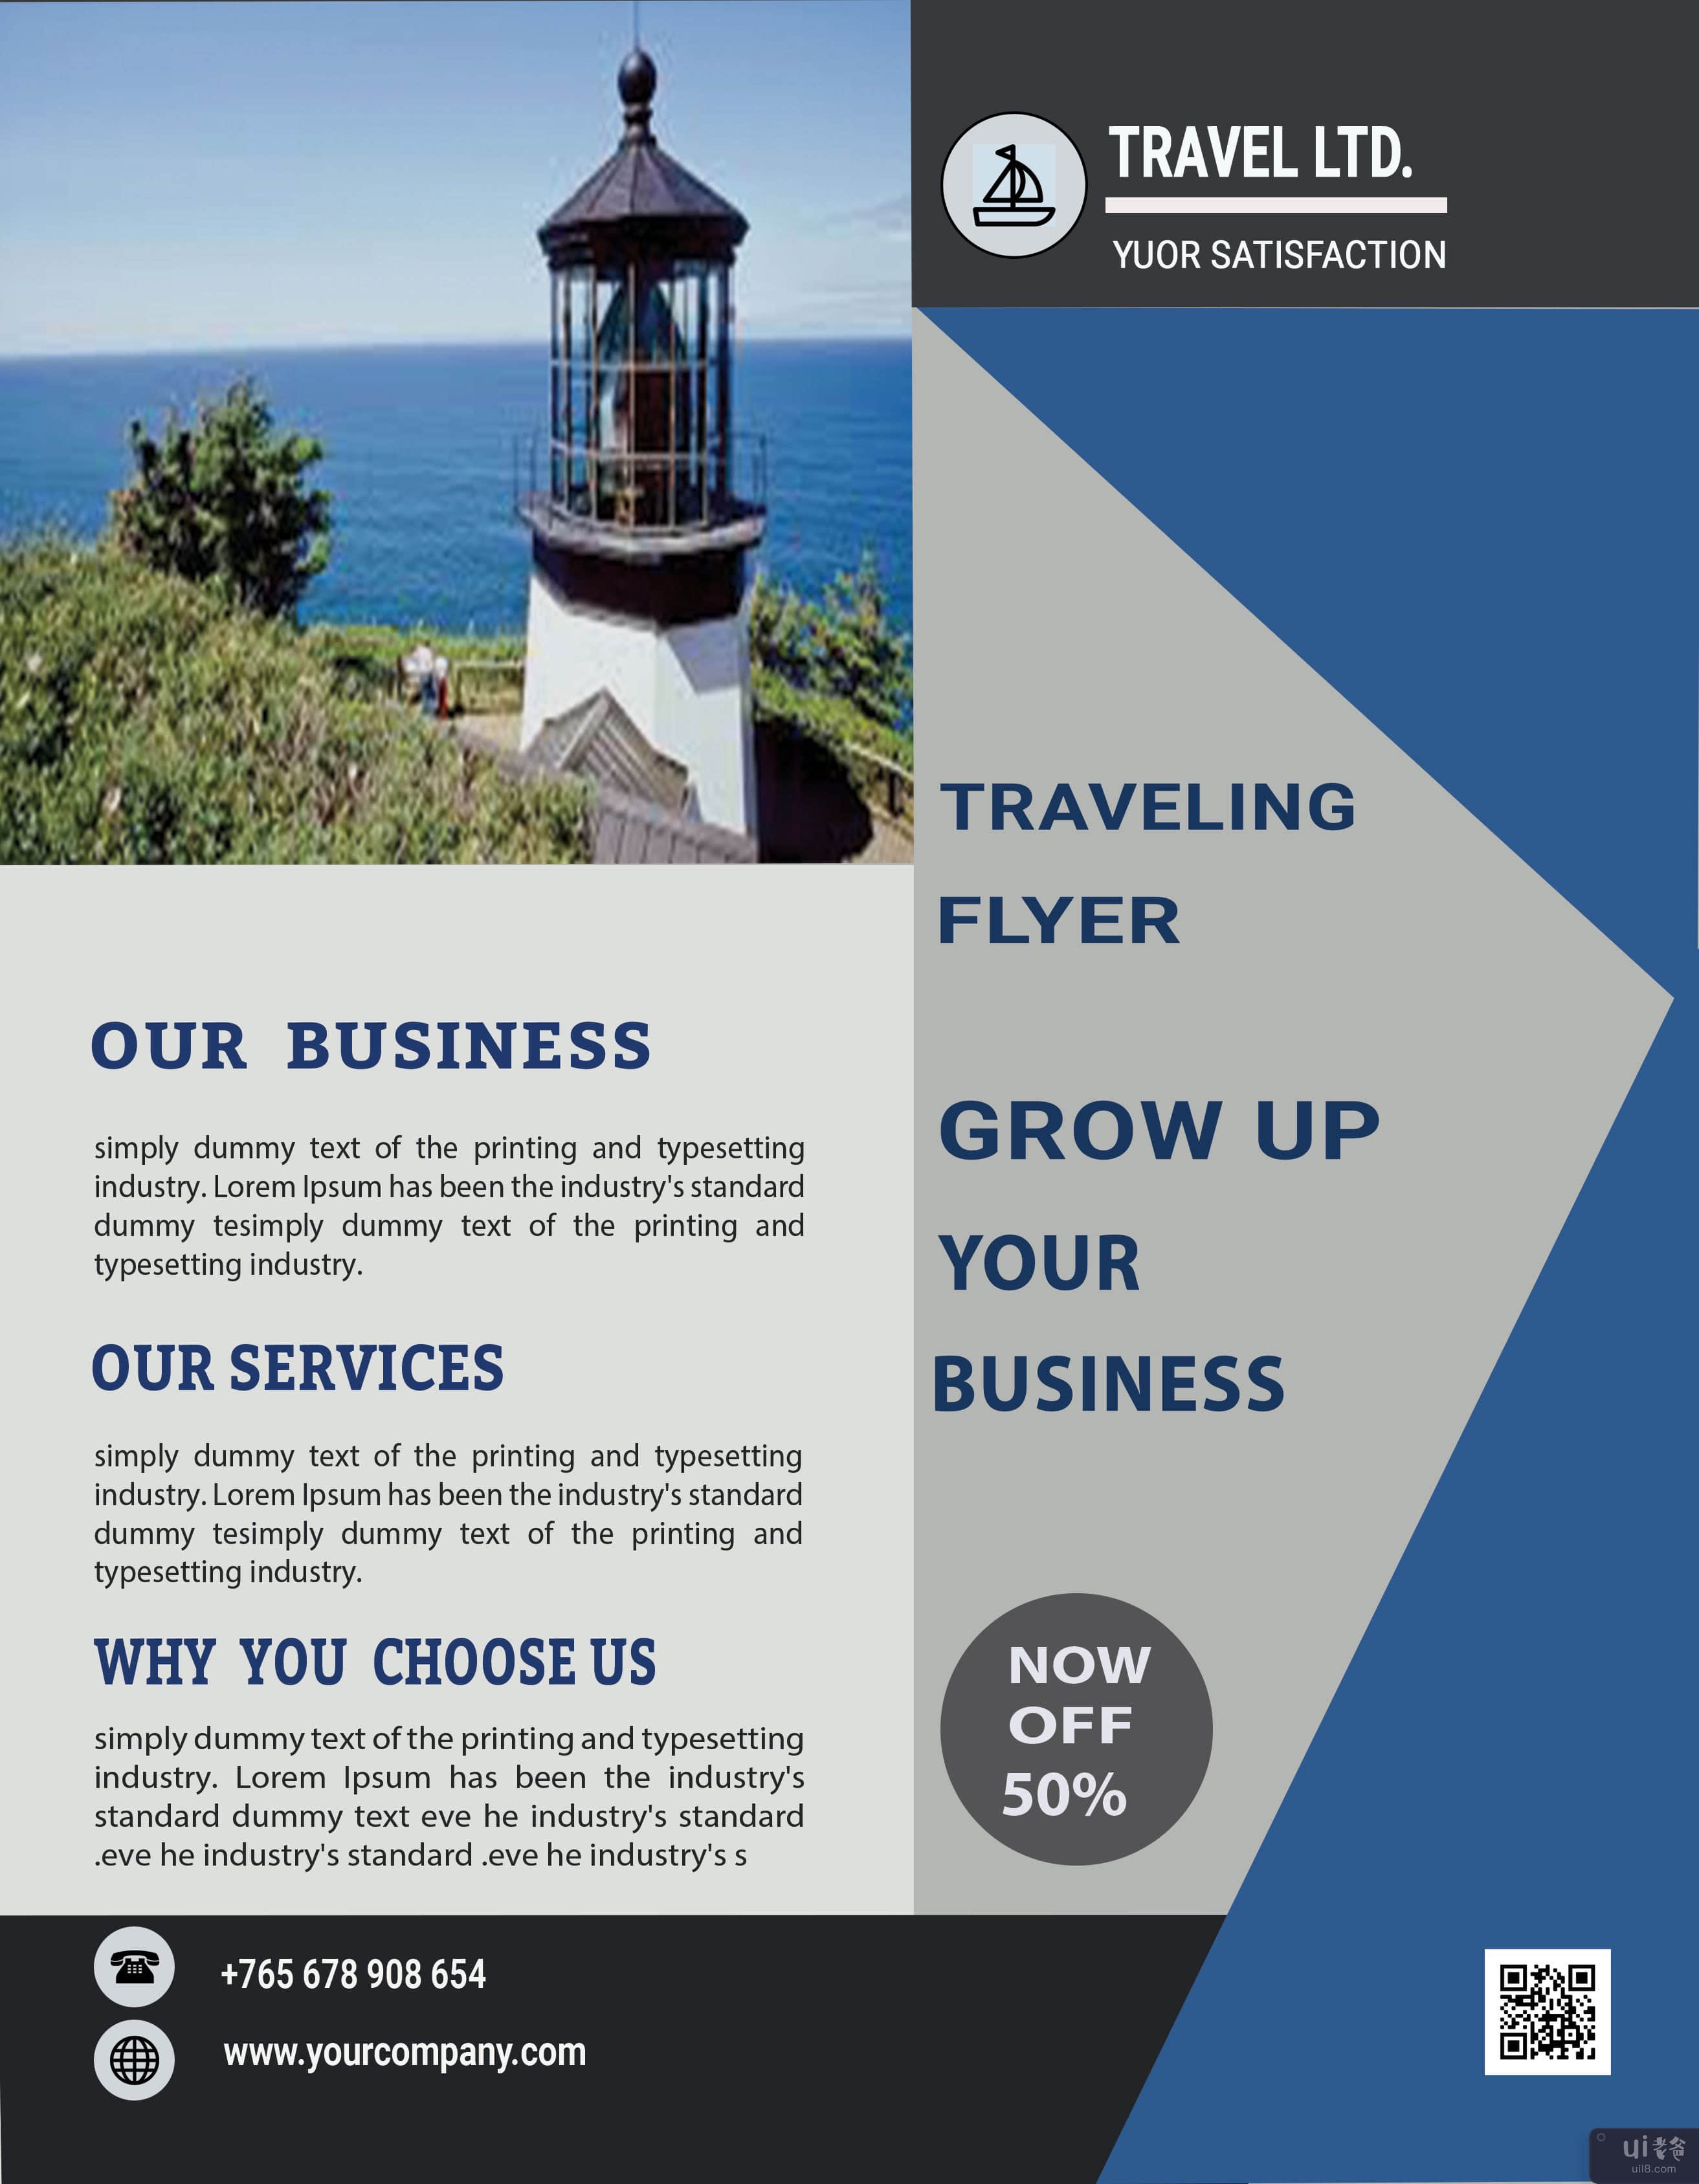 蓝色时尚商务旅行传单模板(Blue stylish Corporate Travel Flyer Template)插图2